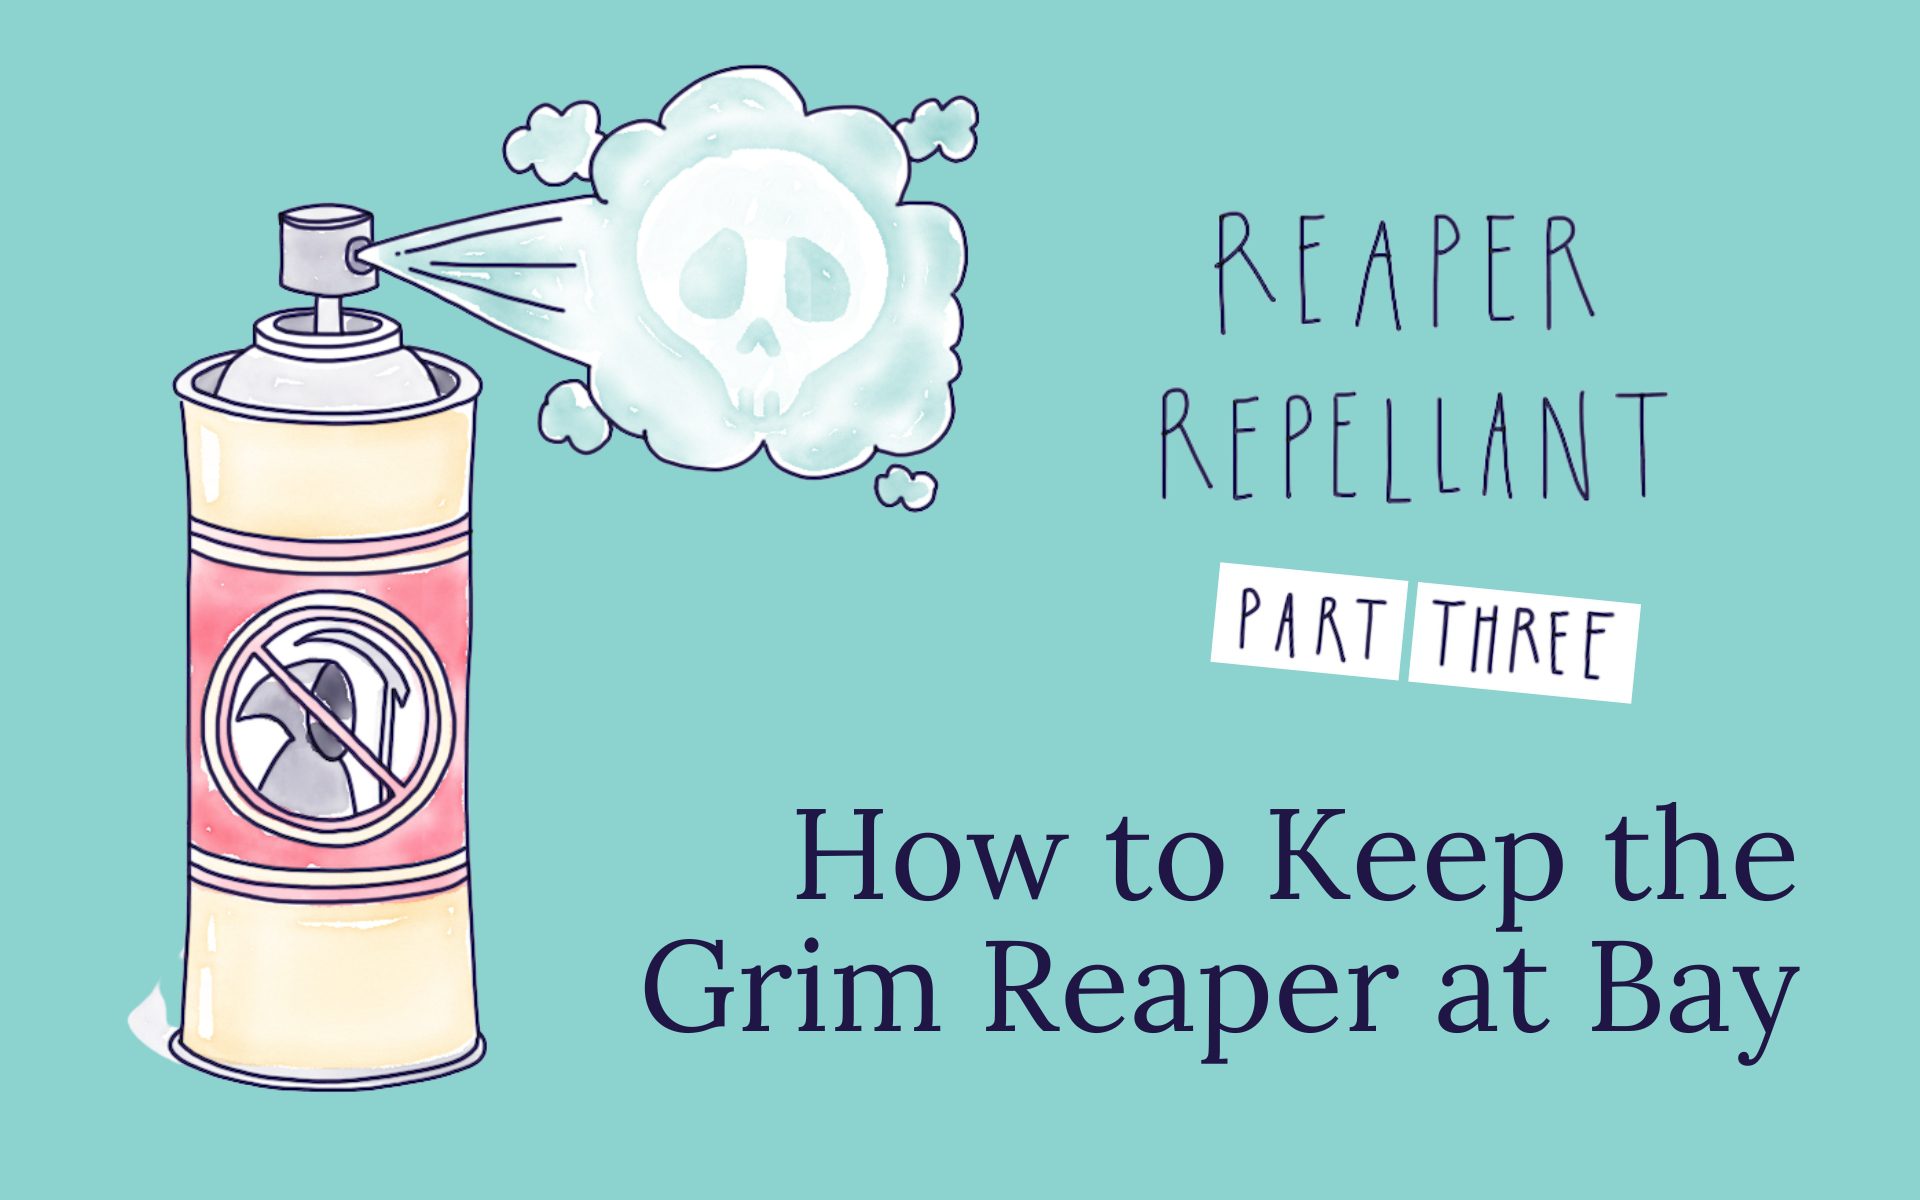 Reaper Repellant Part 3